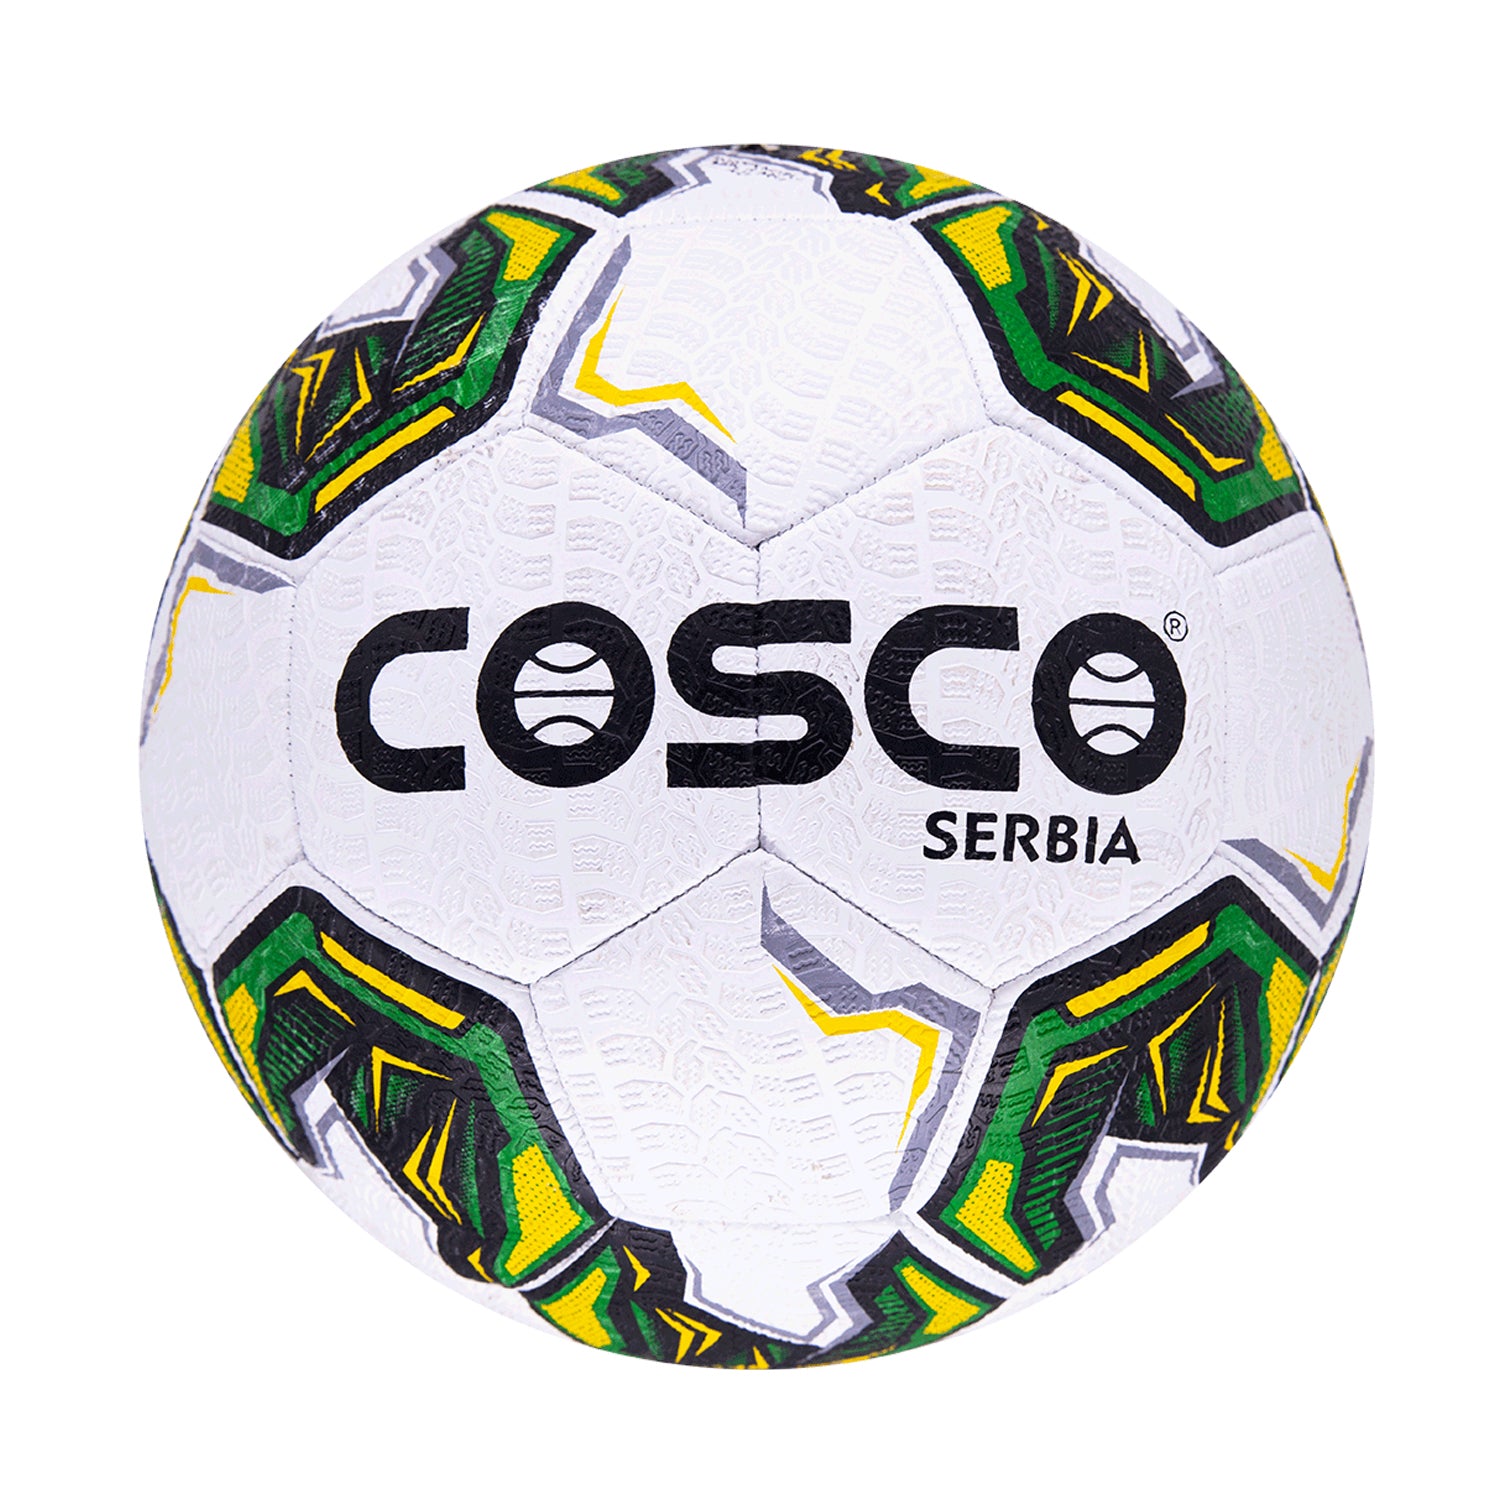 Cosco Serbia Football, White/Black (Size 5) - Best Price online Prokicksports.com